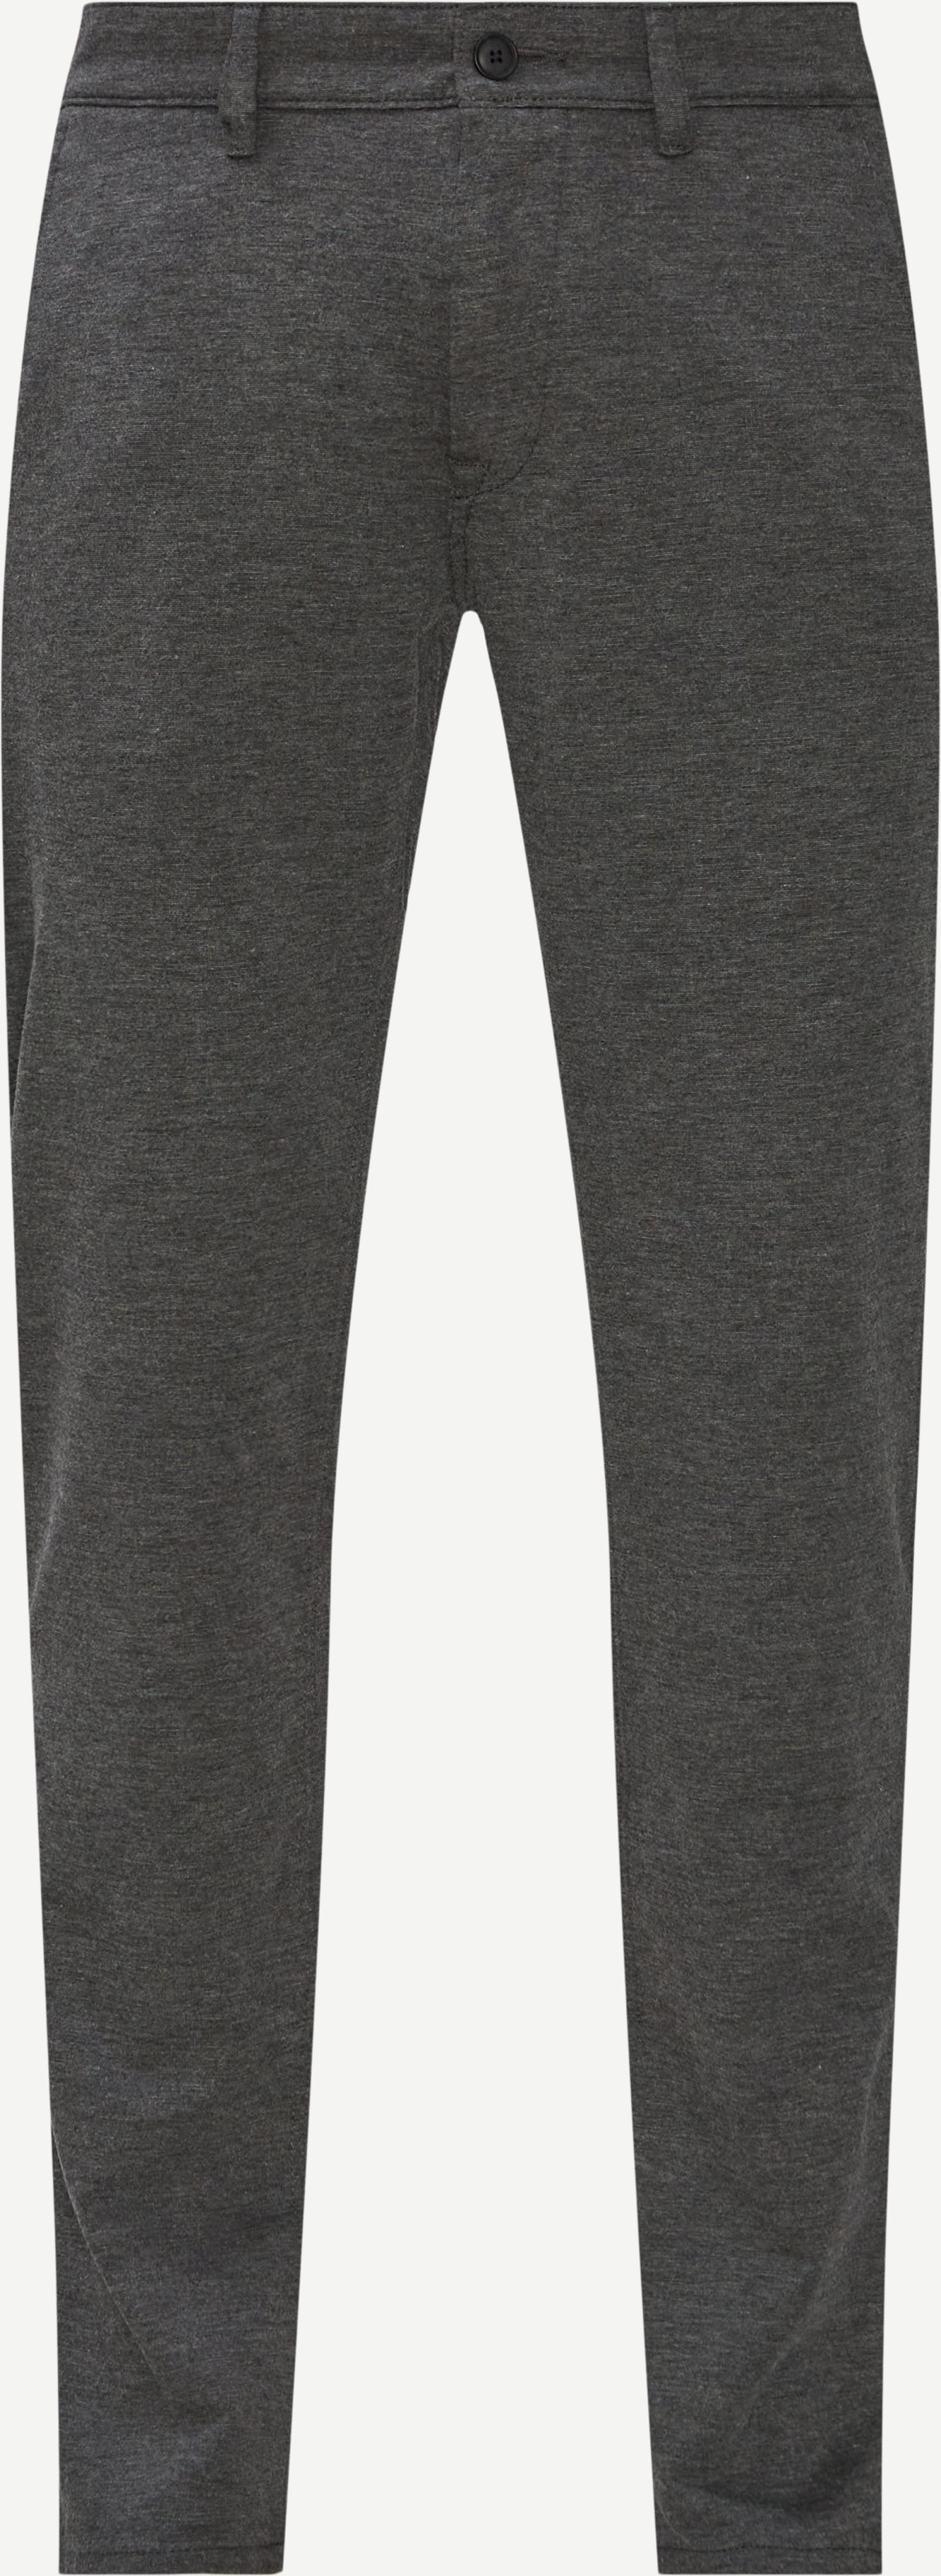 Trousers - Slim fit - Grey